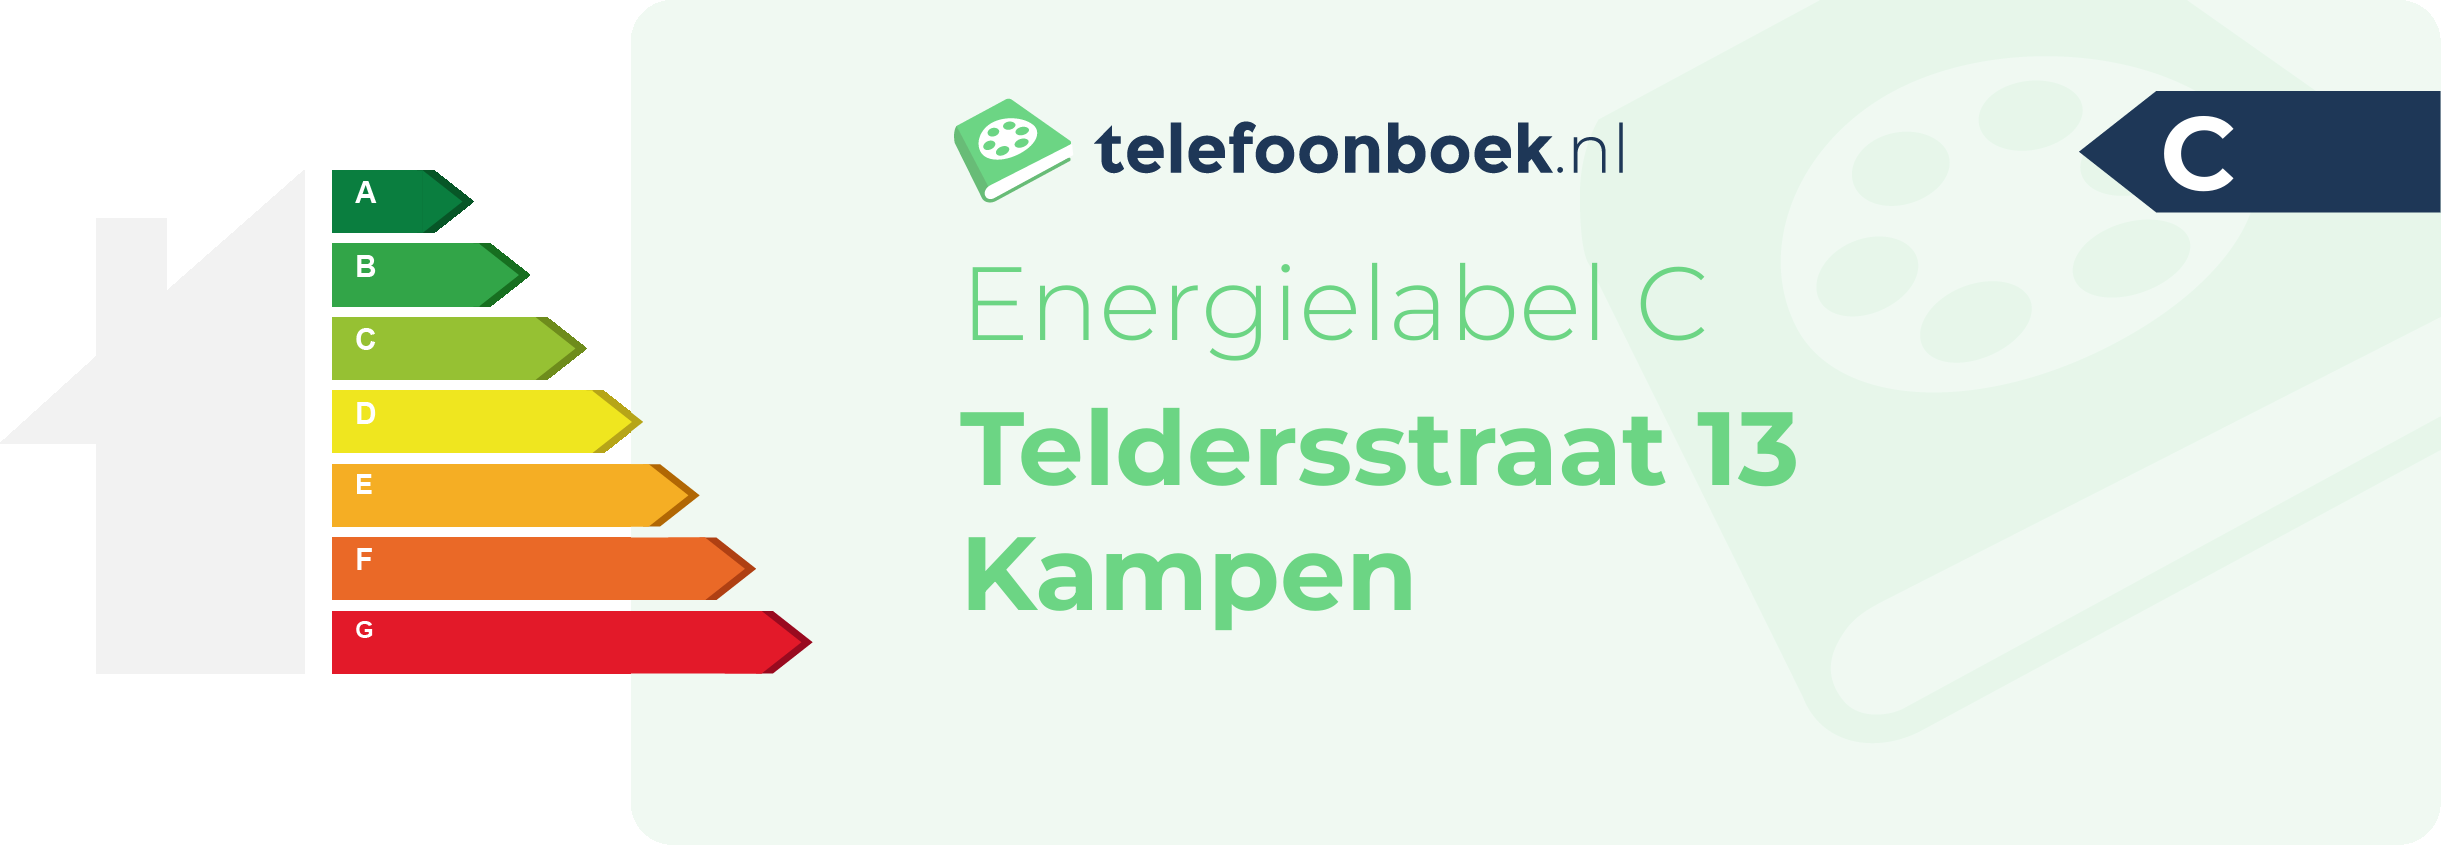 Energielabel Teldersstraat 13 Kampen